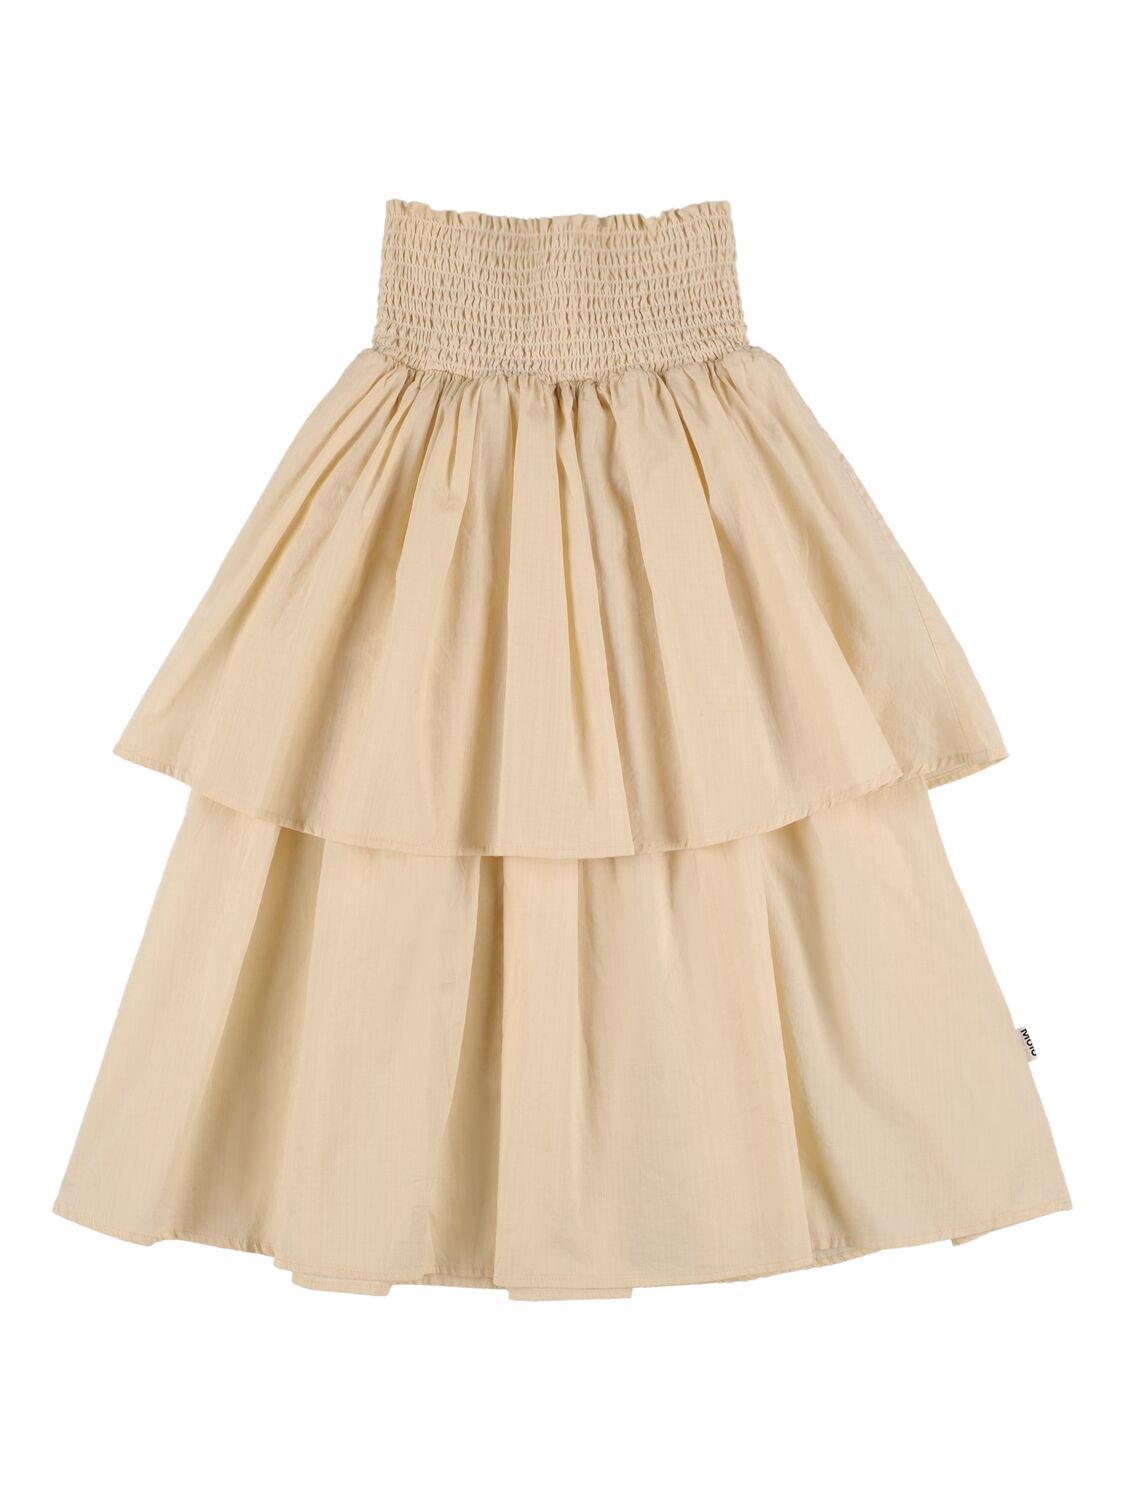 Image of Cotton Skirt